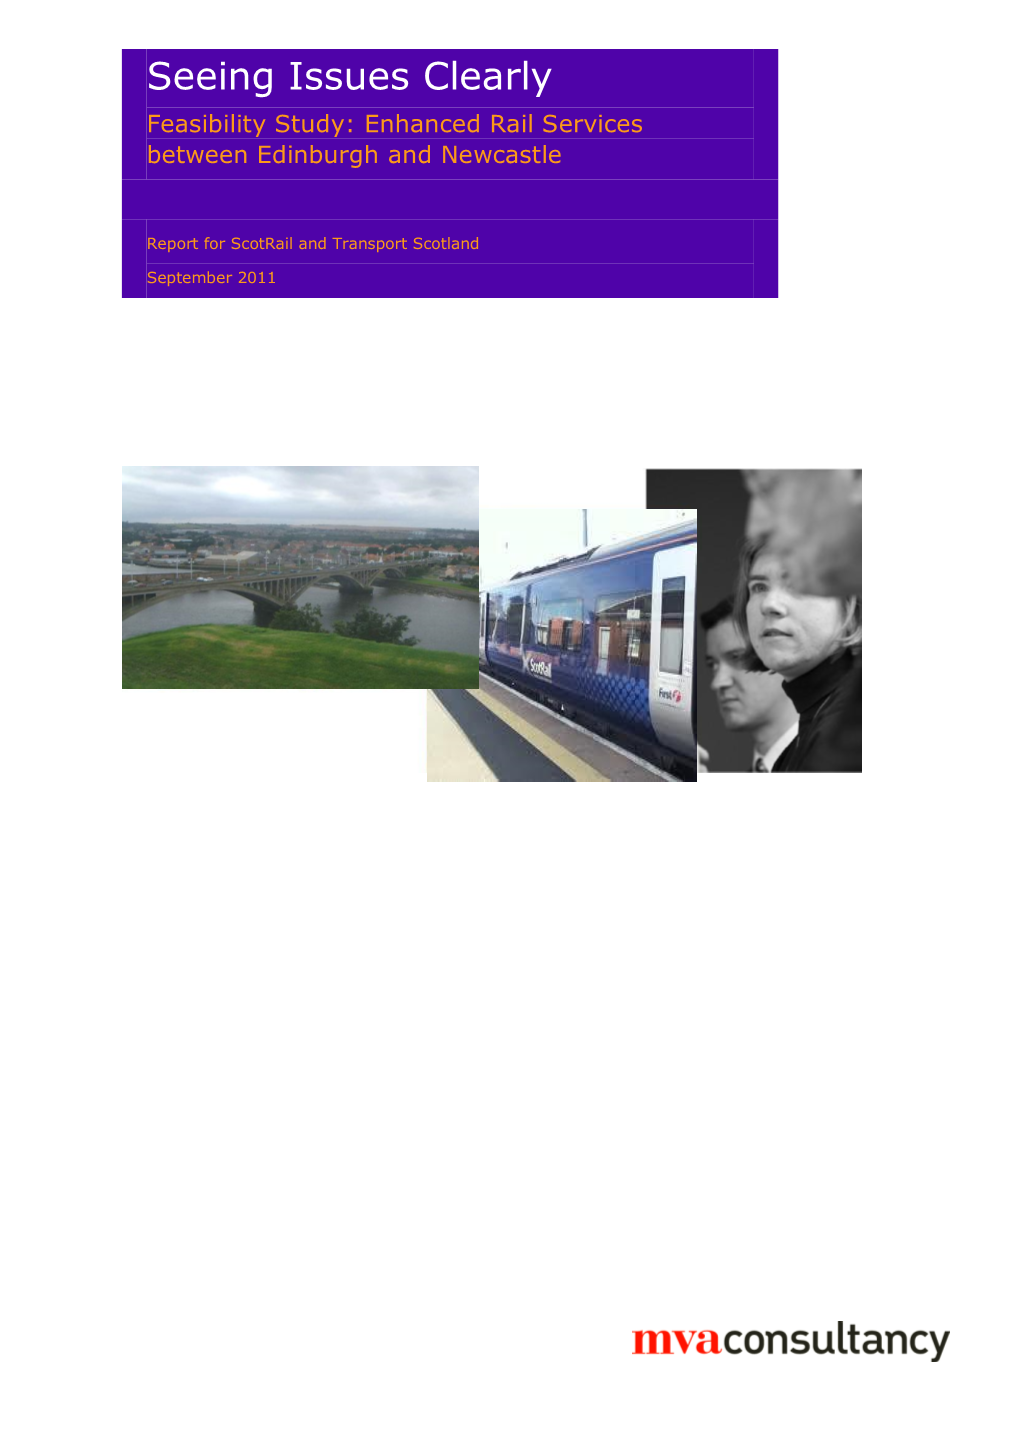 Feasibility Study: Enhanced Rail Services Between Edinburgh and Newcastle